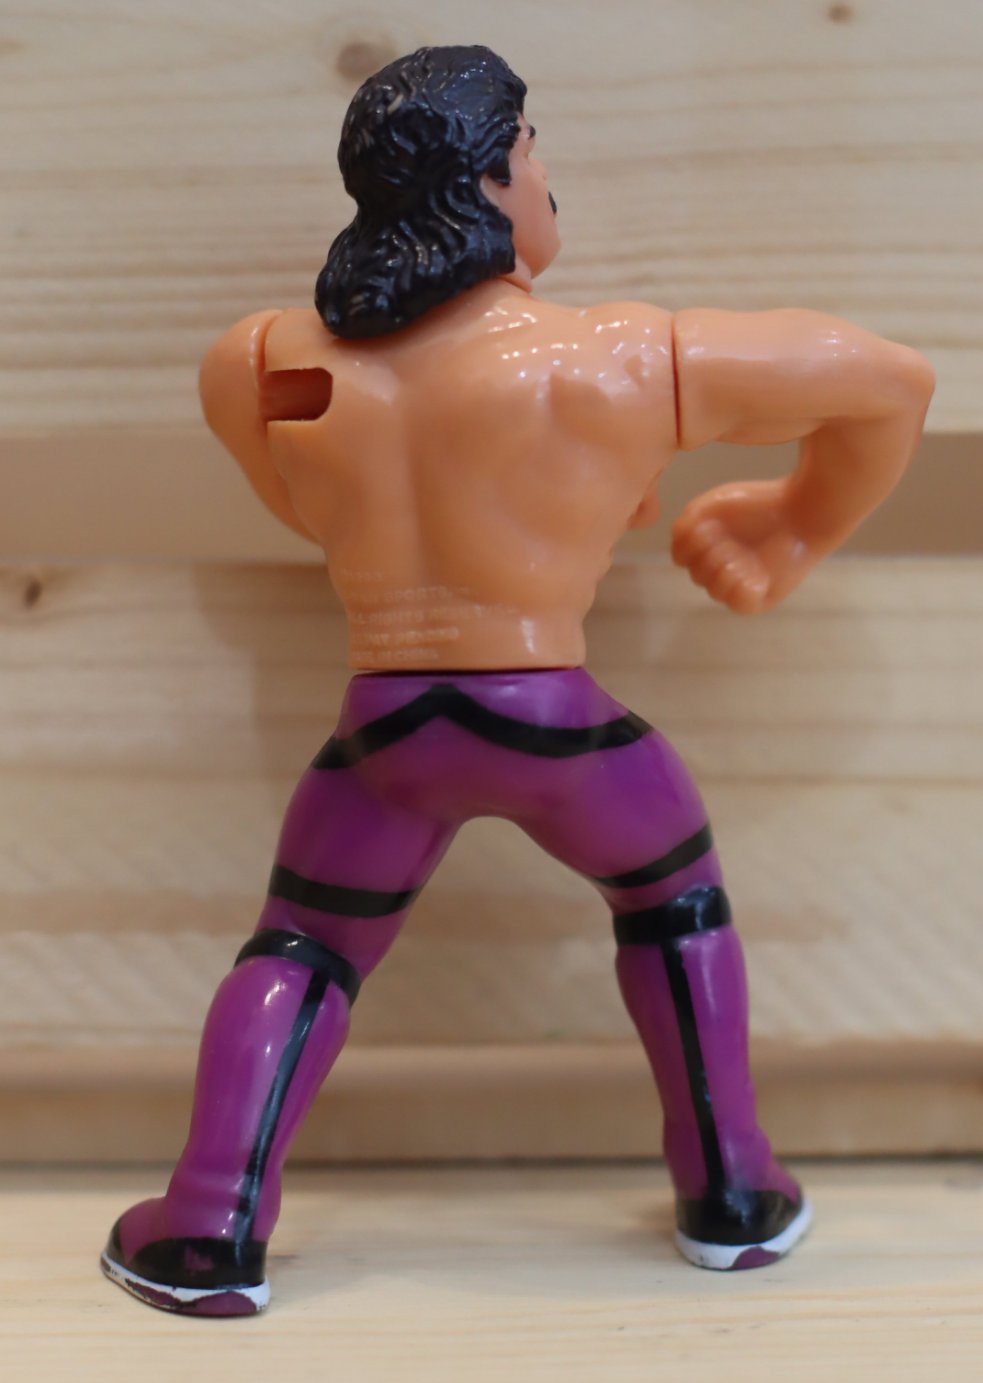 1992 Hasbro Ravishing Rick Rude Loose WWF Wrestling Figure Near-Mint!